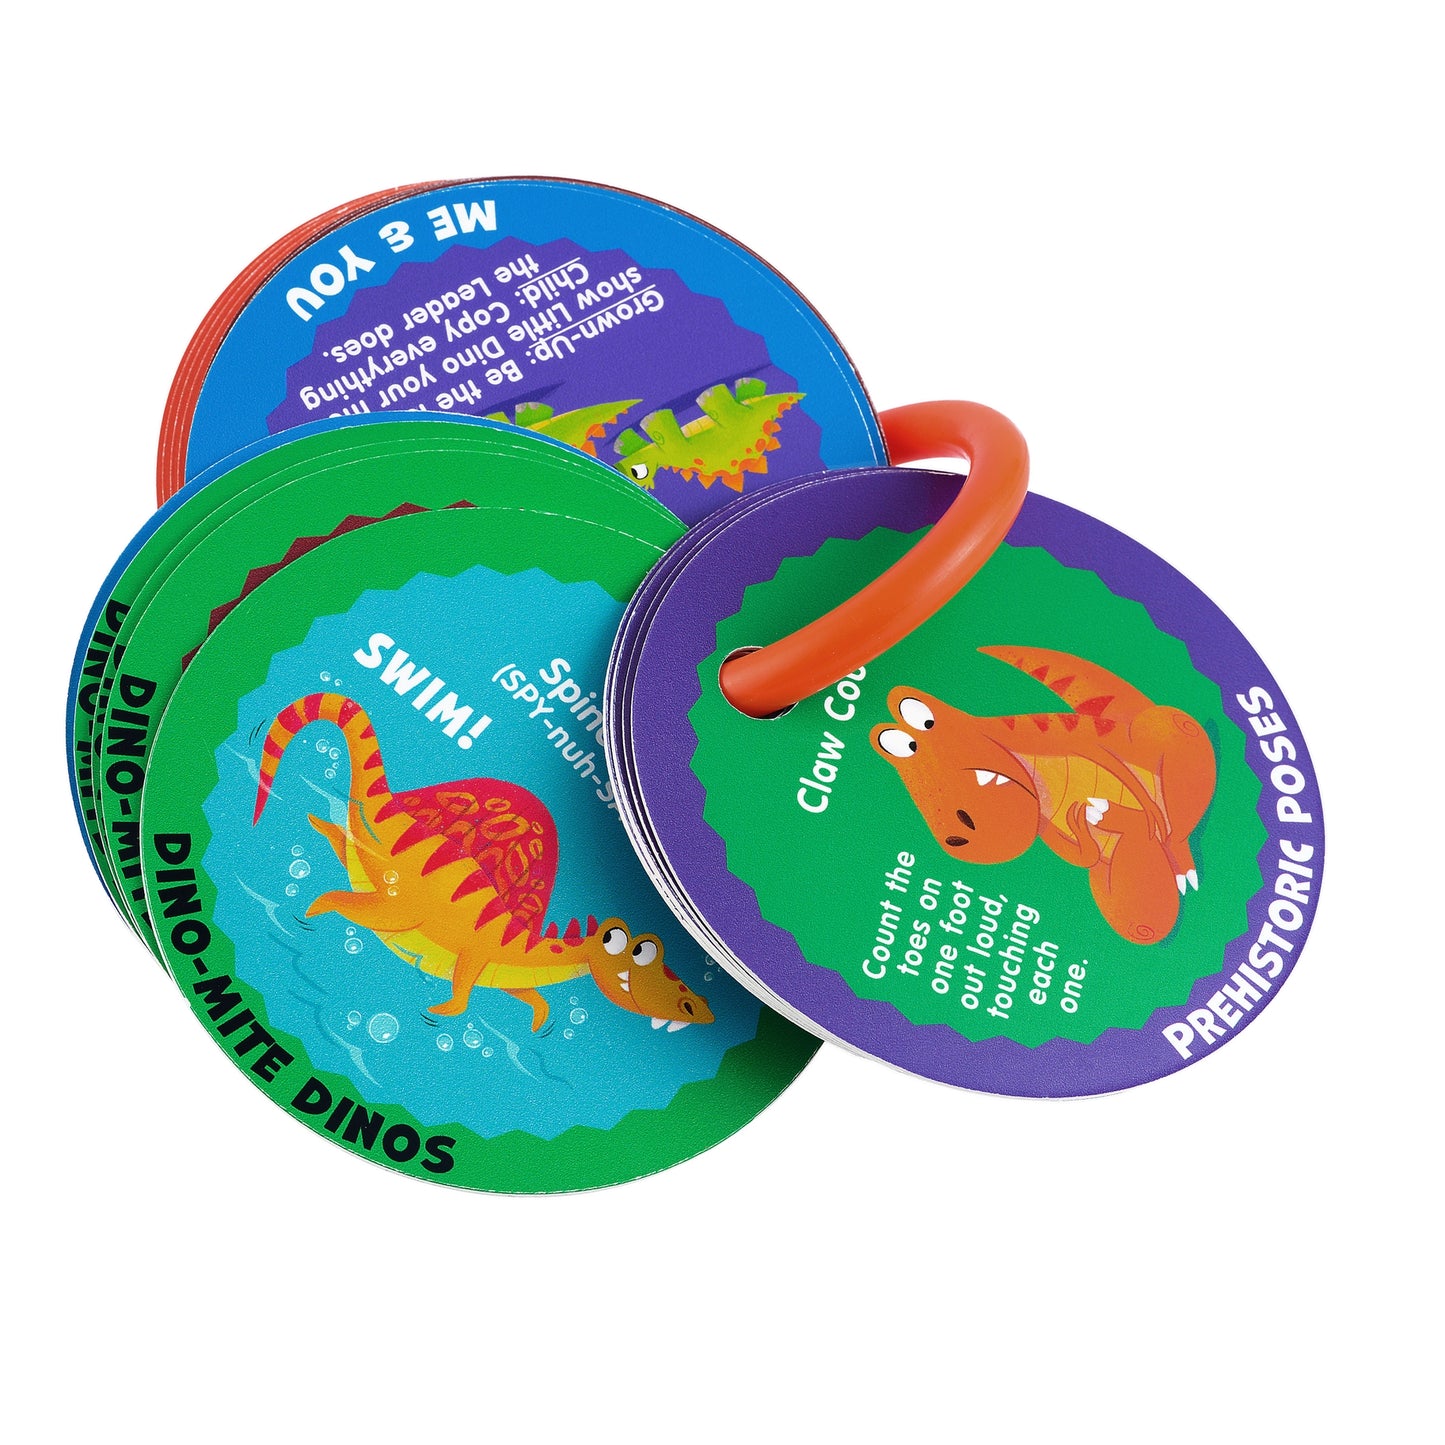 Mollybee Kids - Preschool Action Cards Dino Stomp and Roar!